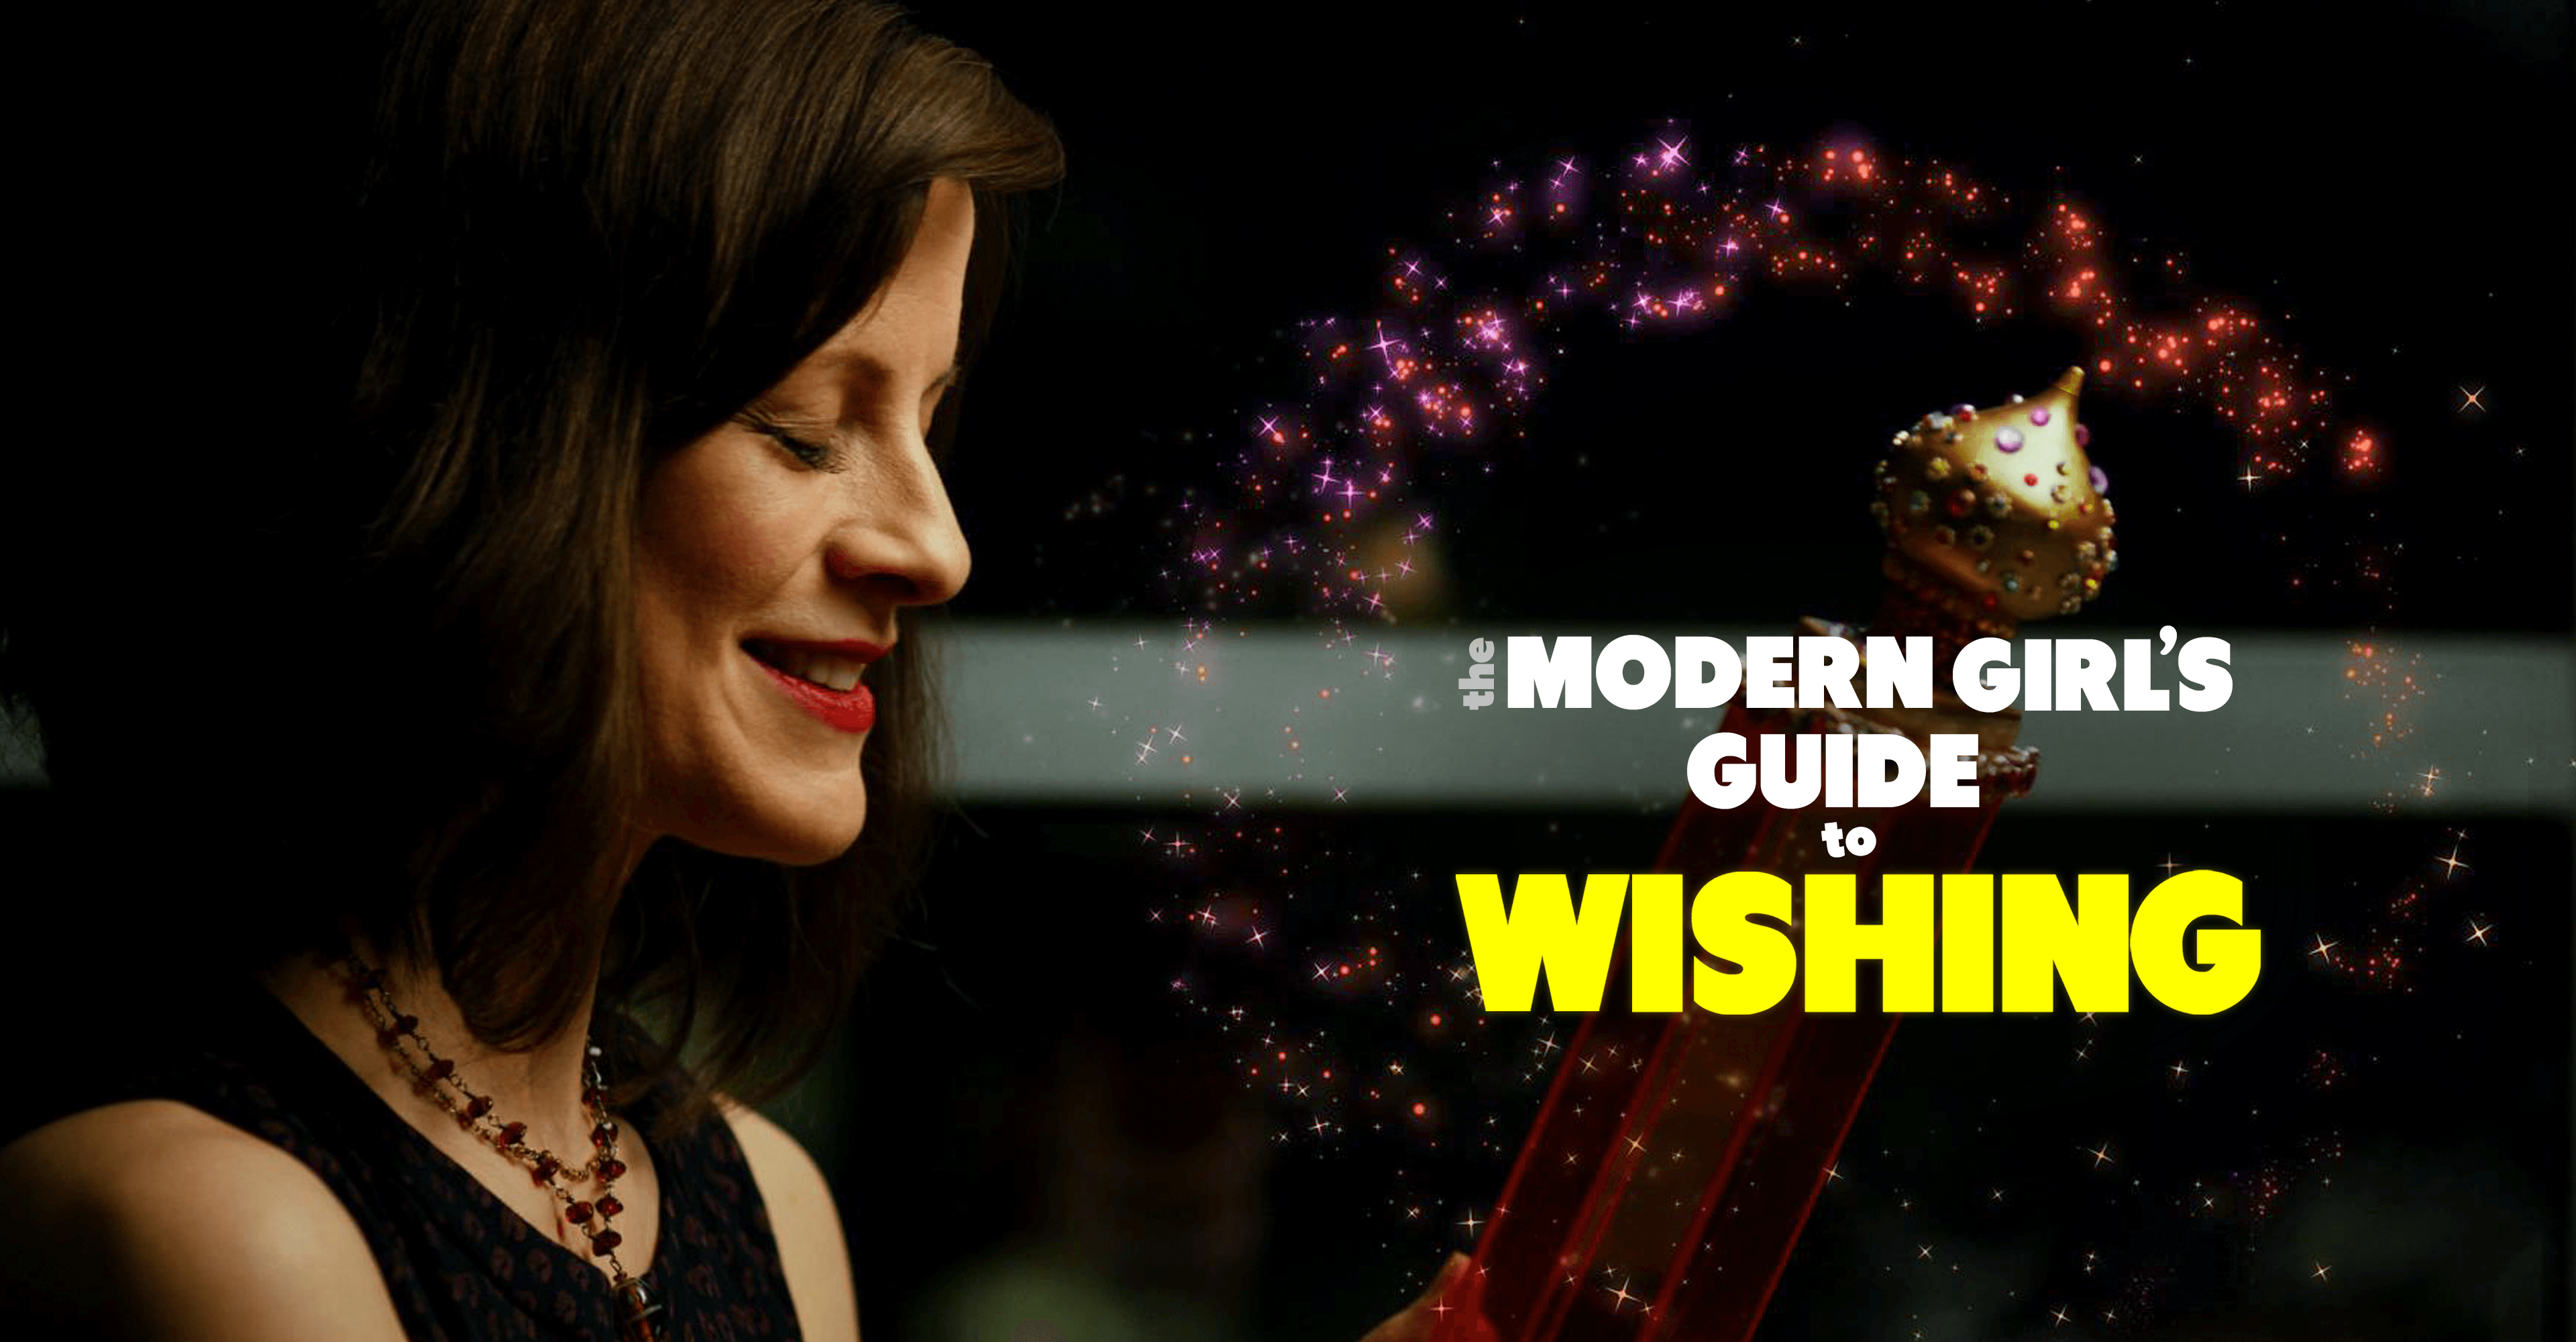 The Modern Girl's Guide to Wishing